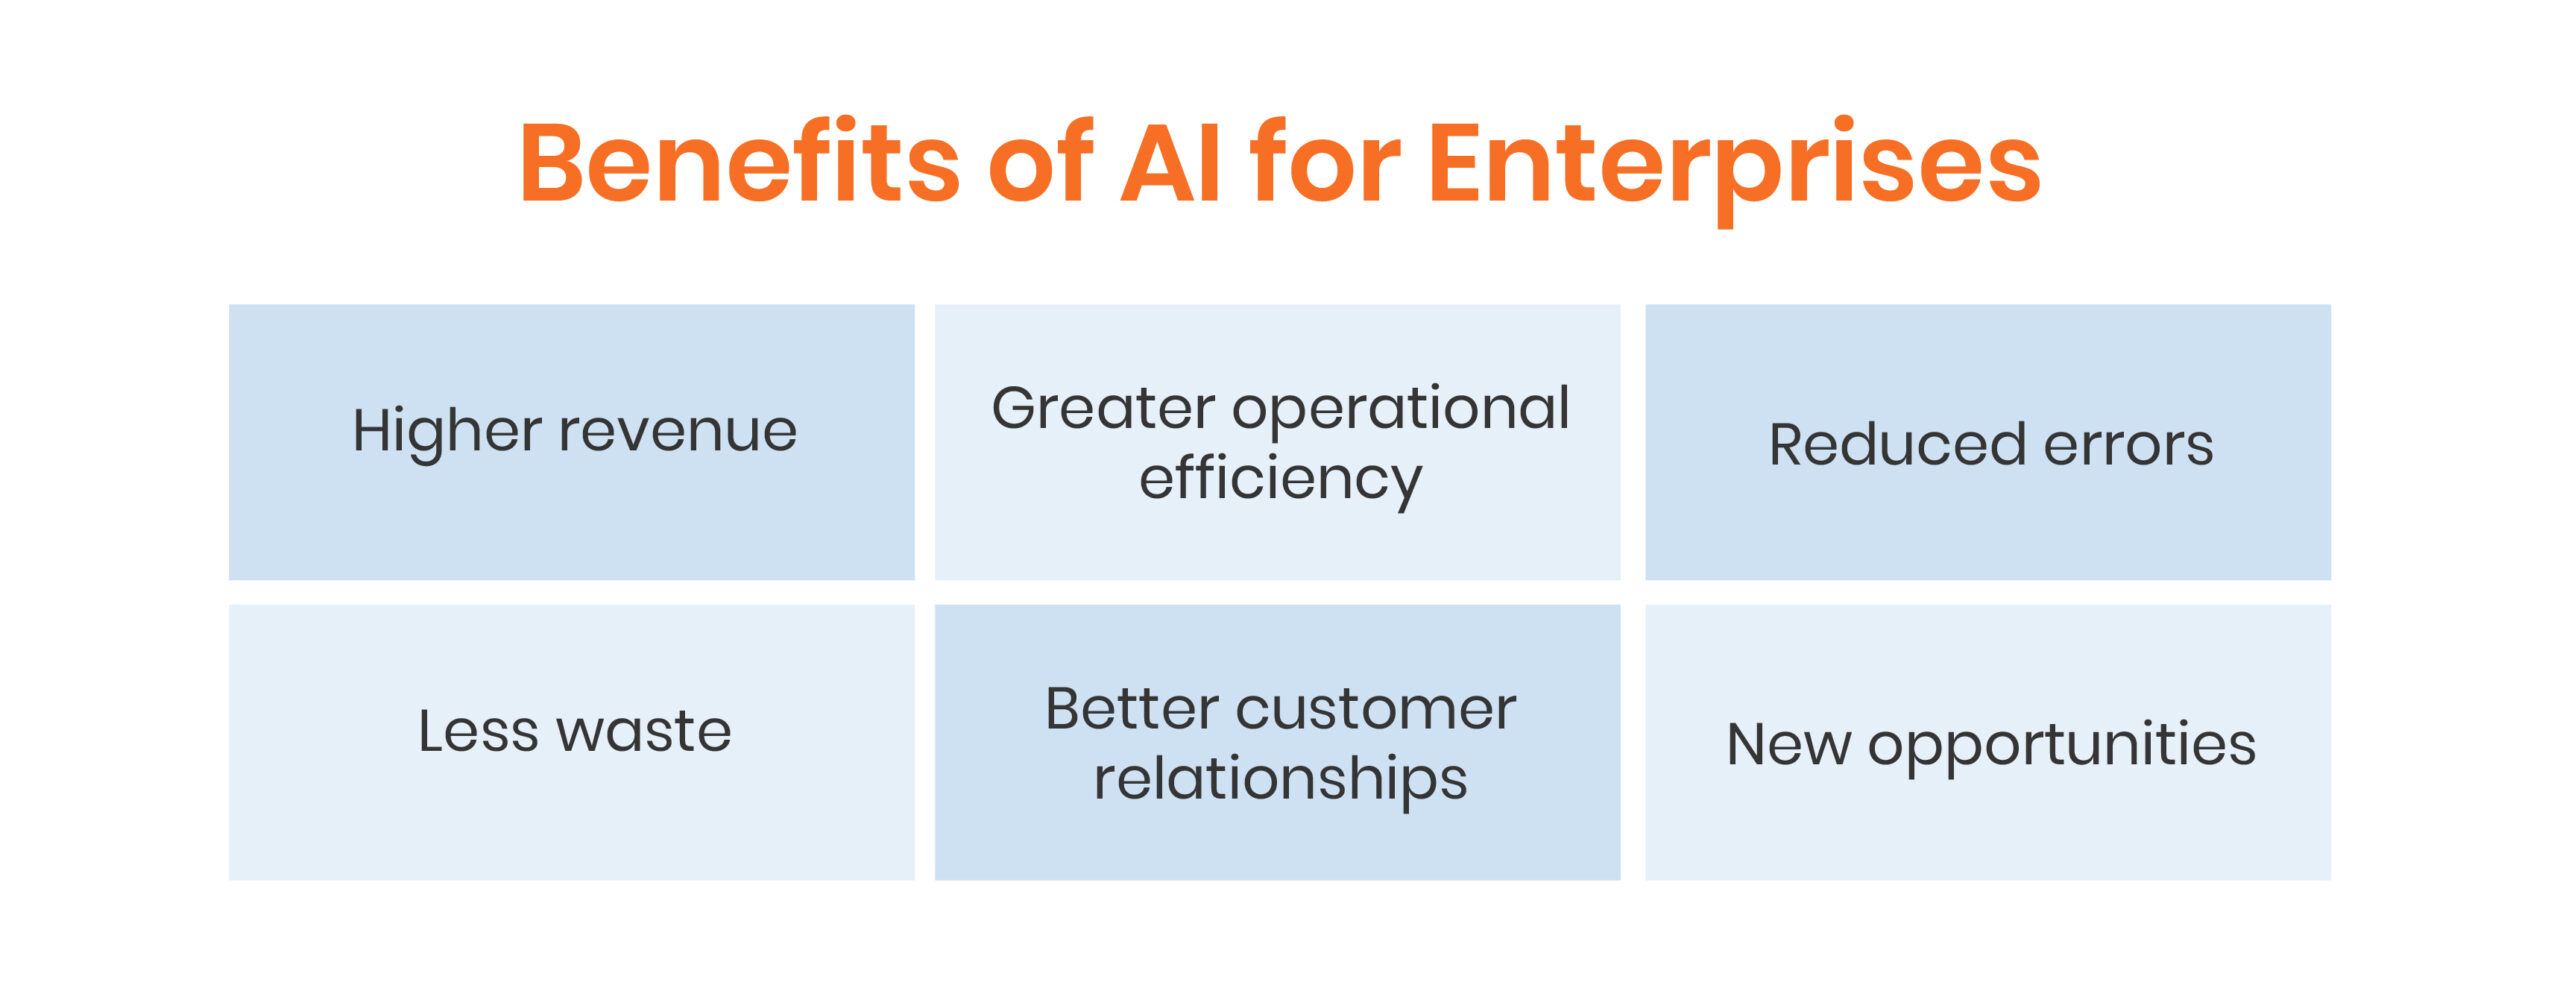 Benefits of AI for Enterprises